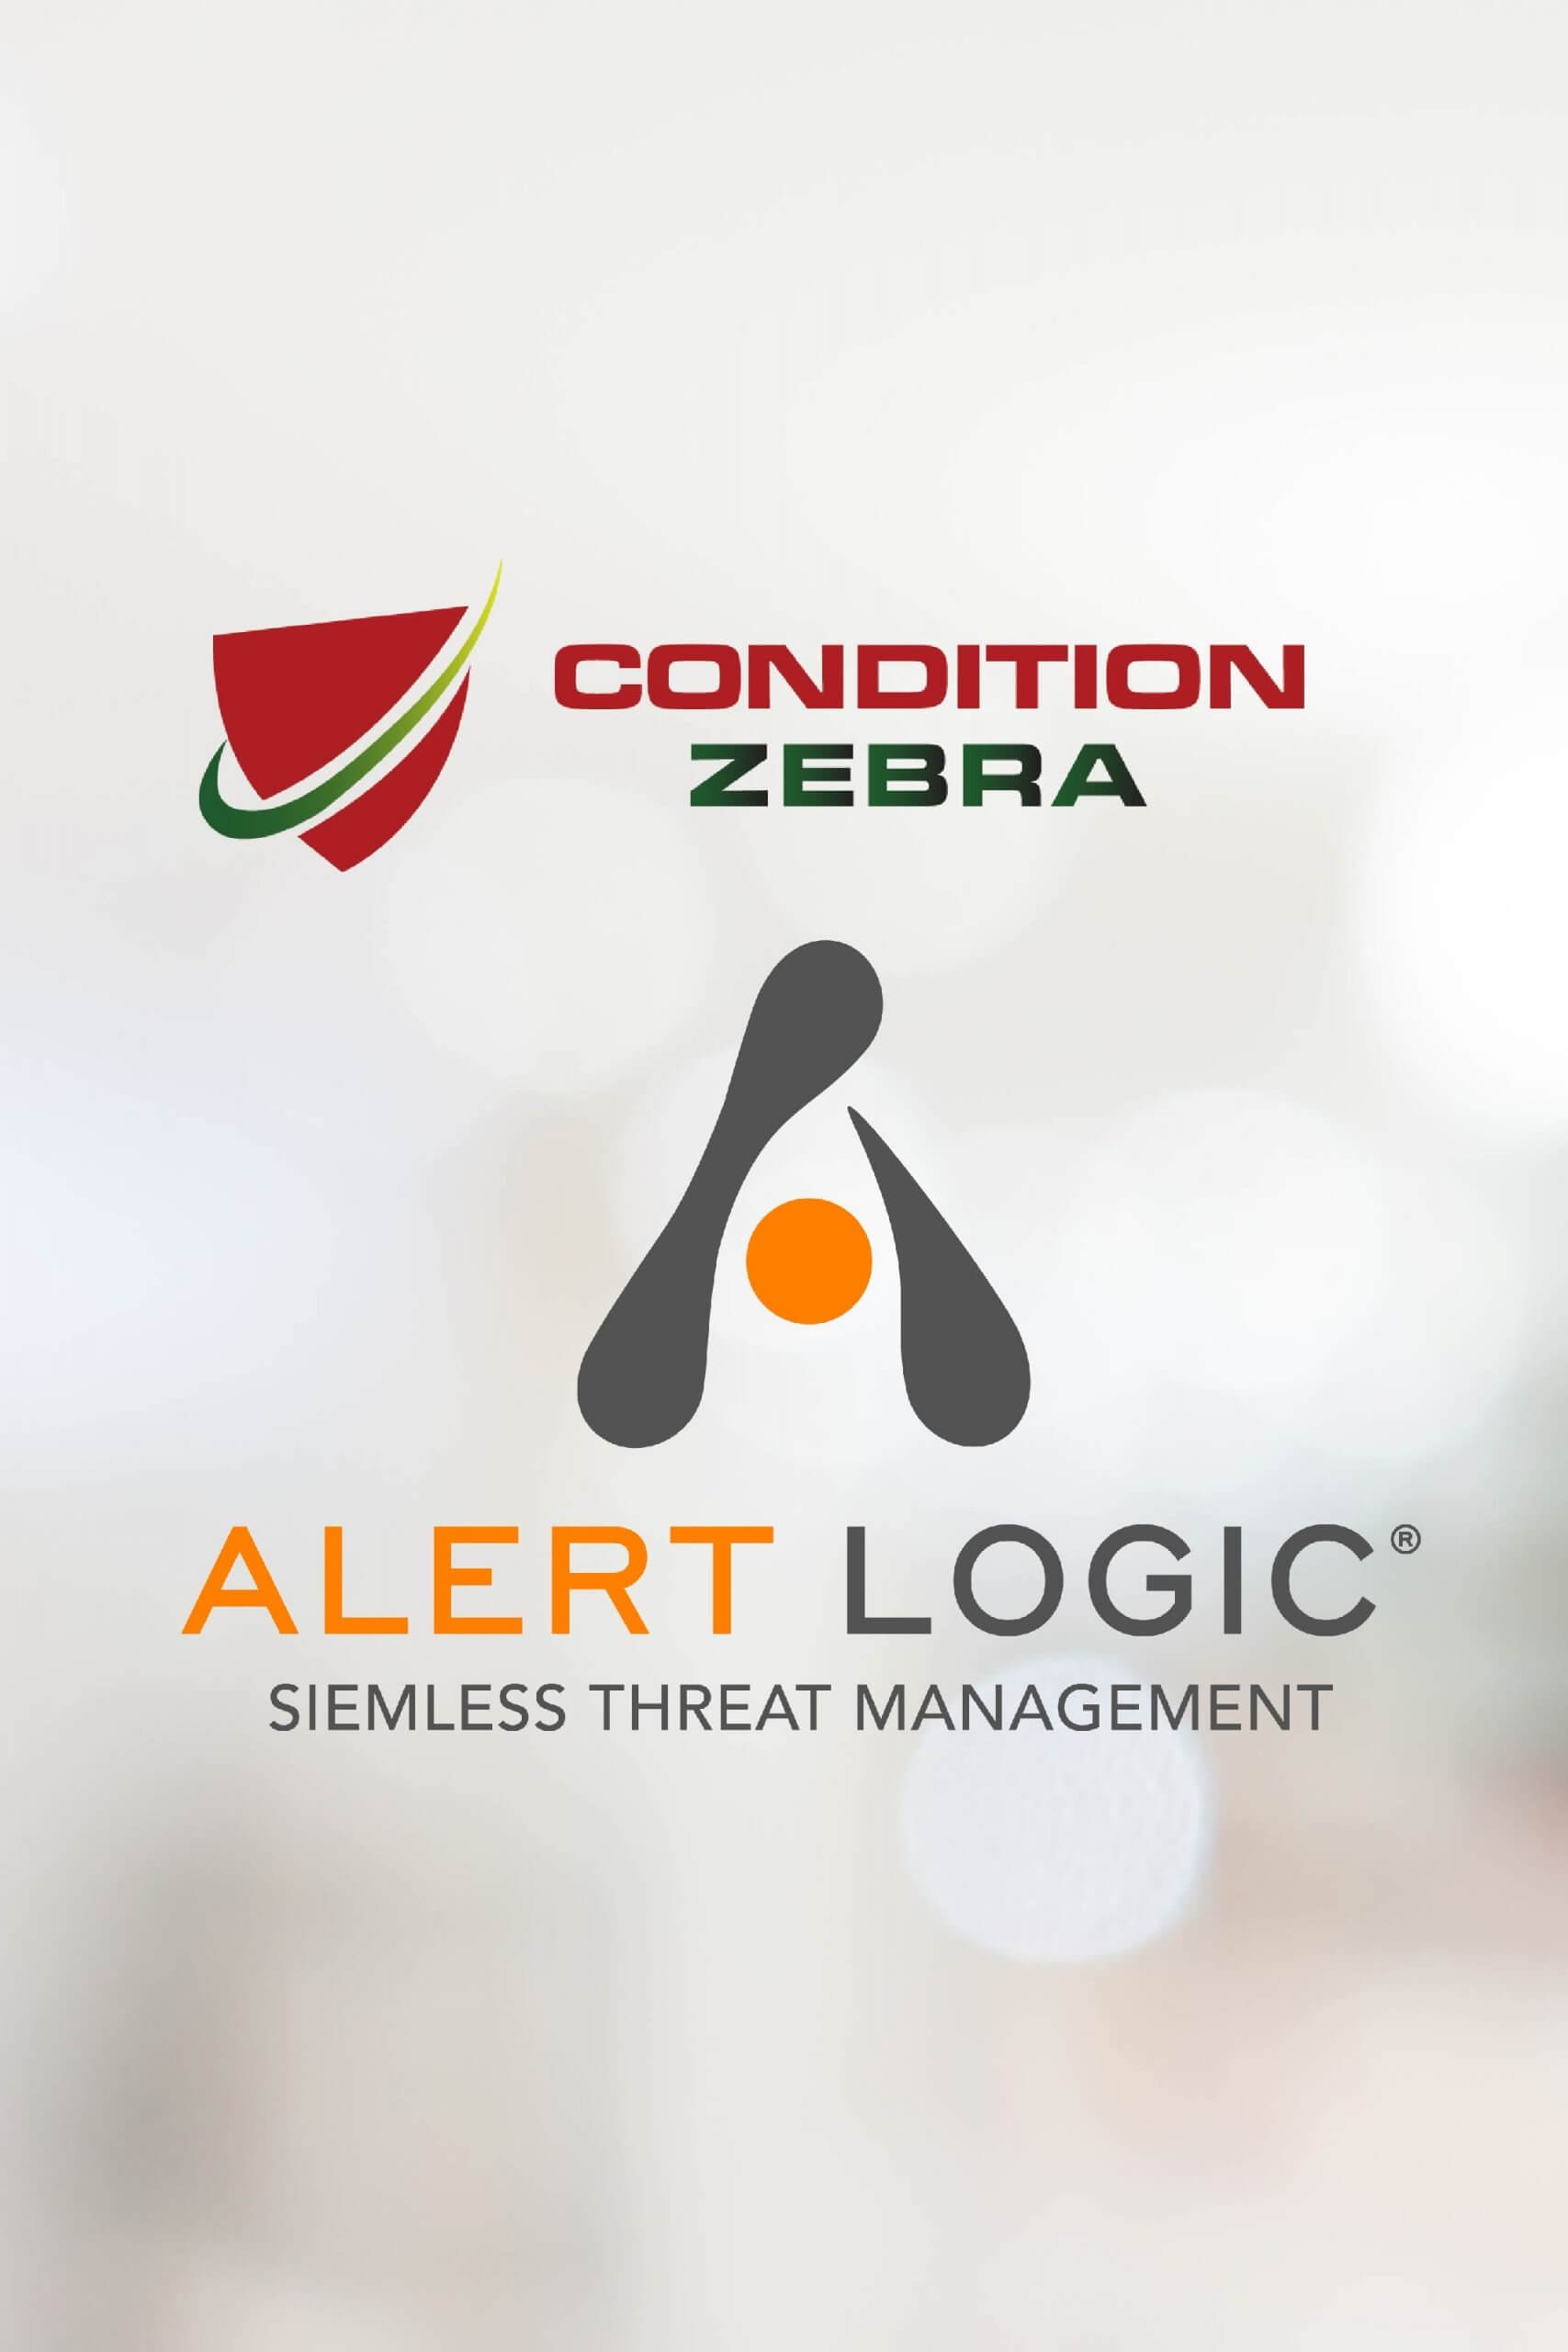 Condition Zebra announce new partnership with Alert Logic